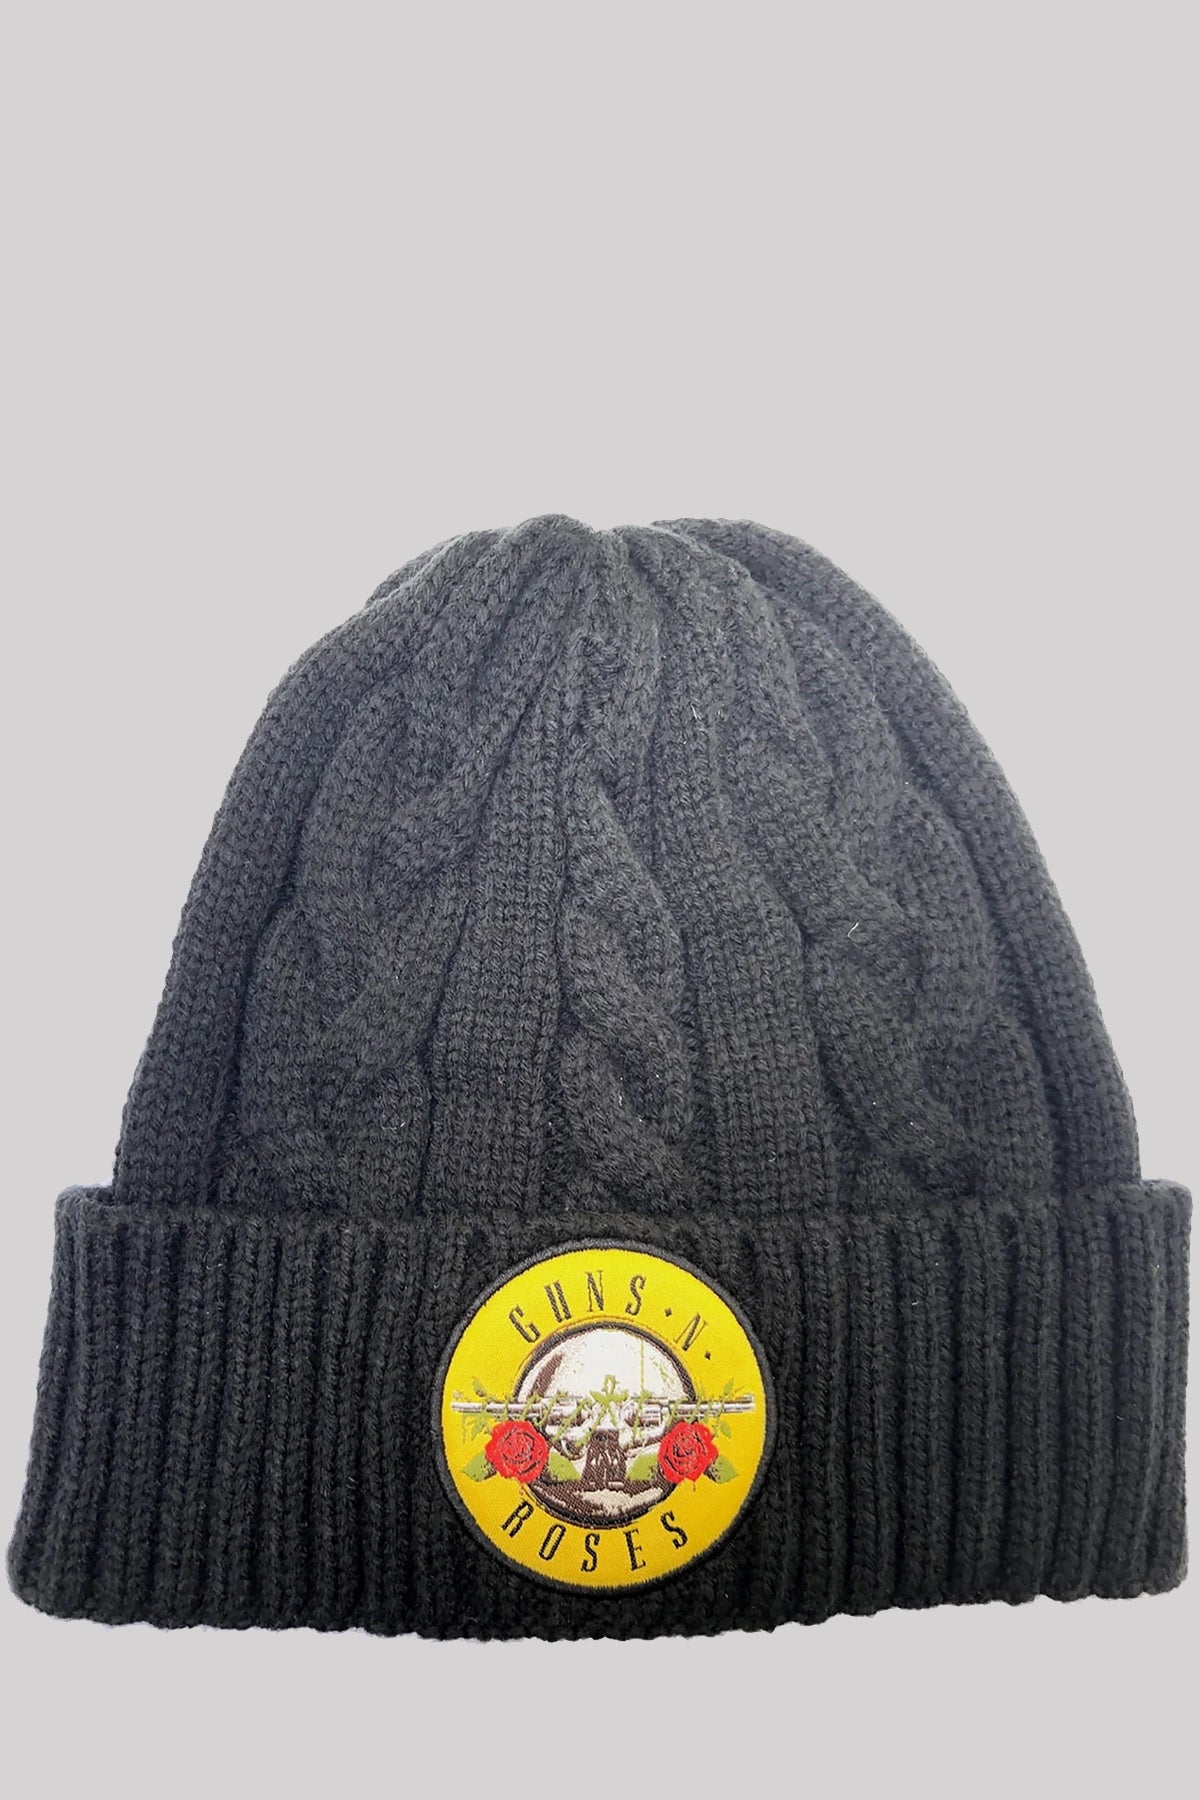 Guns N' Roses Unisex Beanie Hat: Circle Logo (Cable Knit)